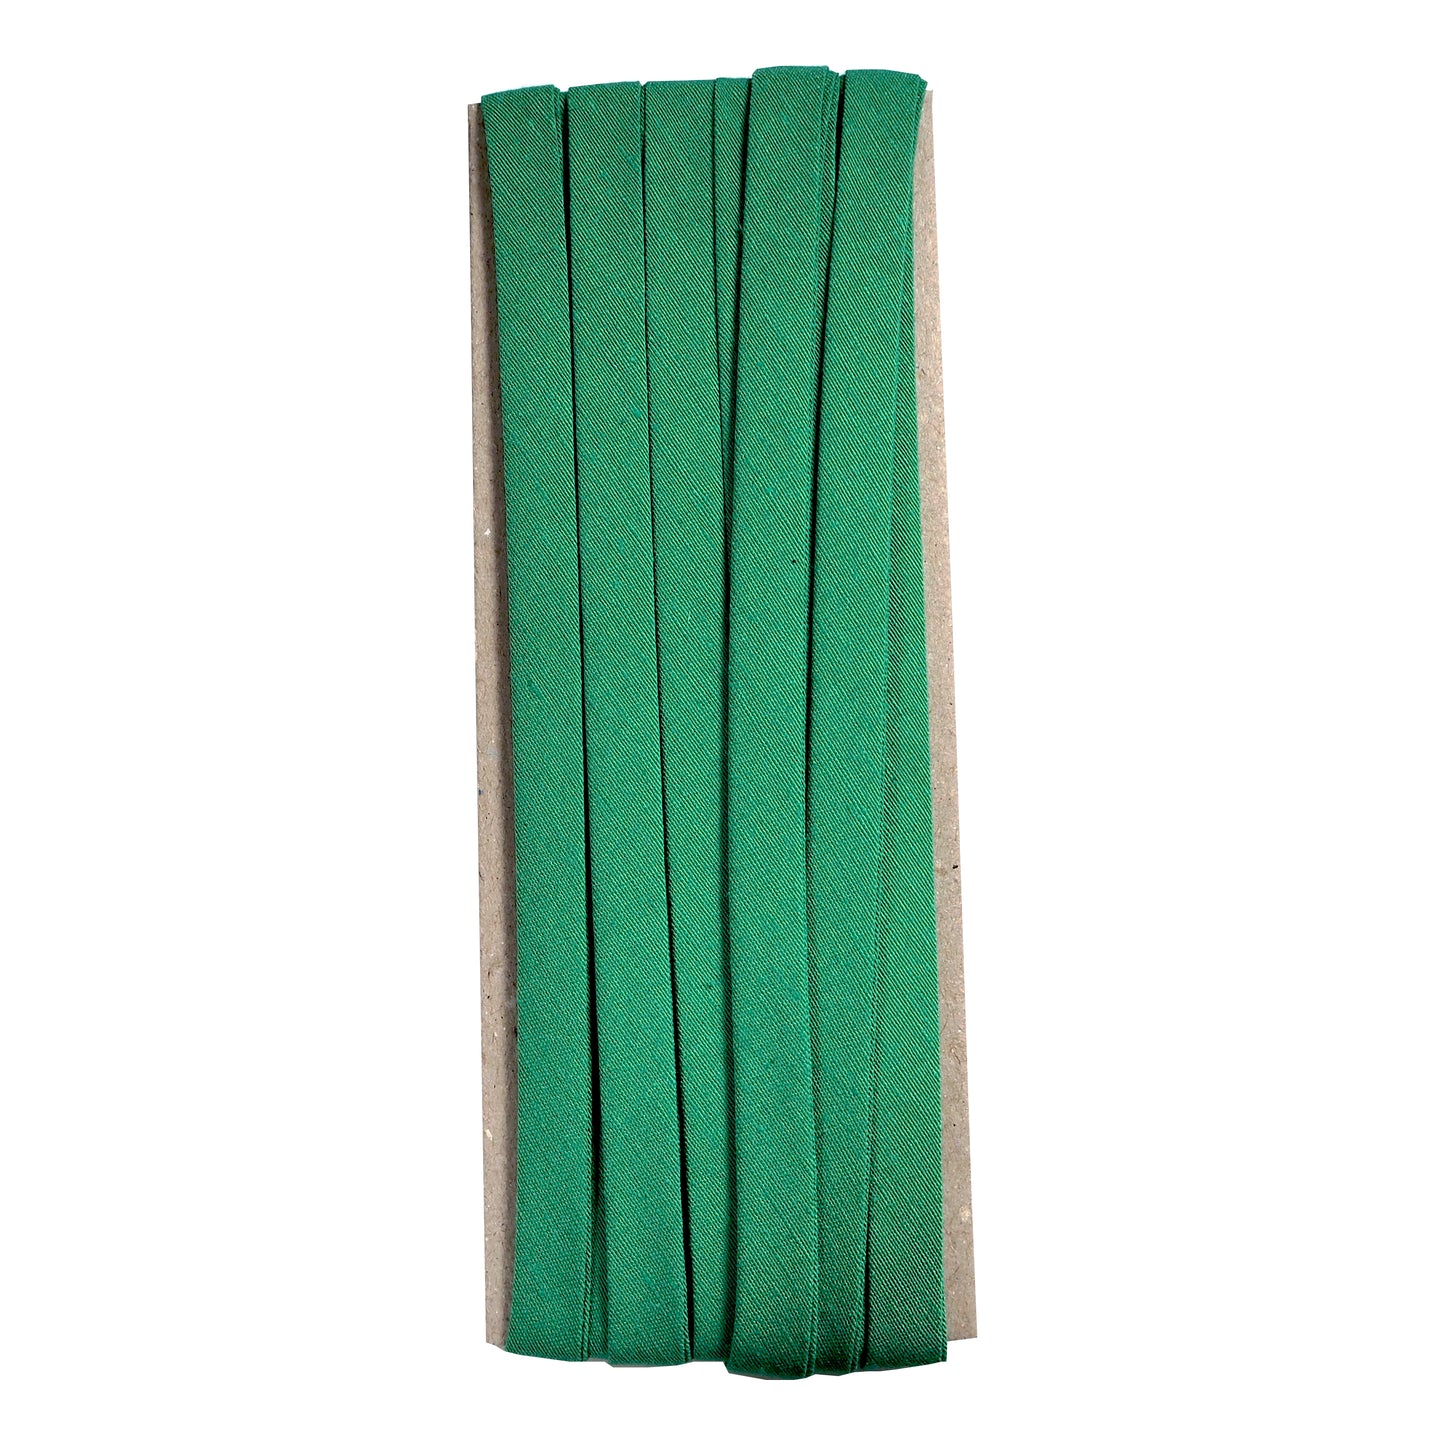 double fold cotton bias binding tape 10mm- 3/8inch (5yds) 5 yards / green